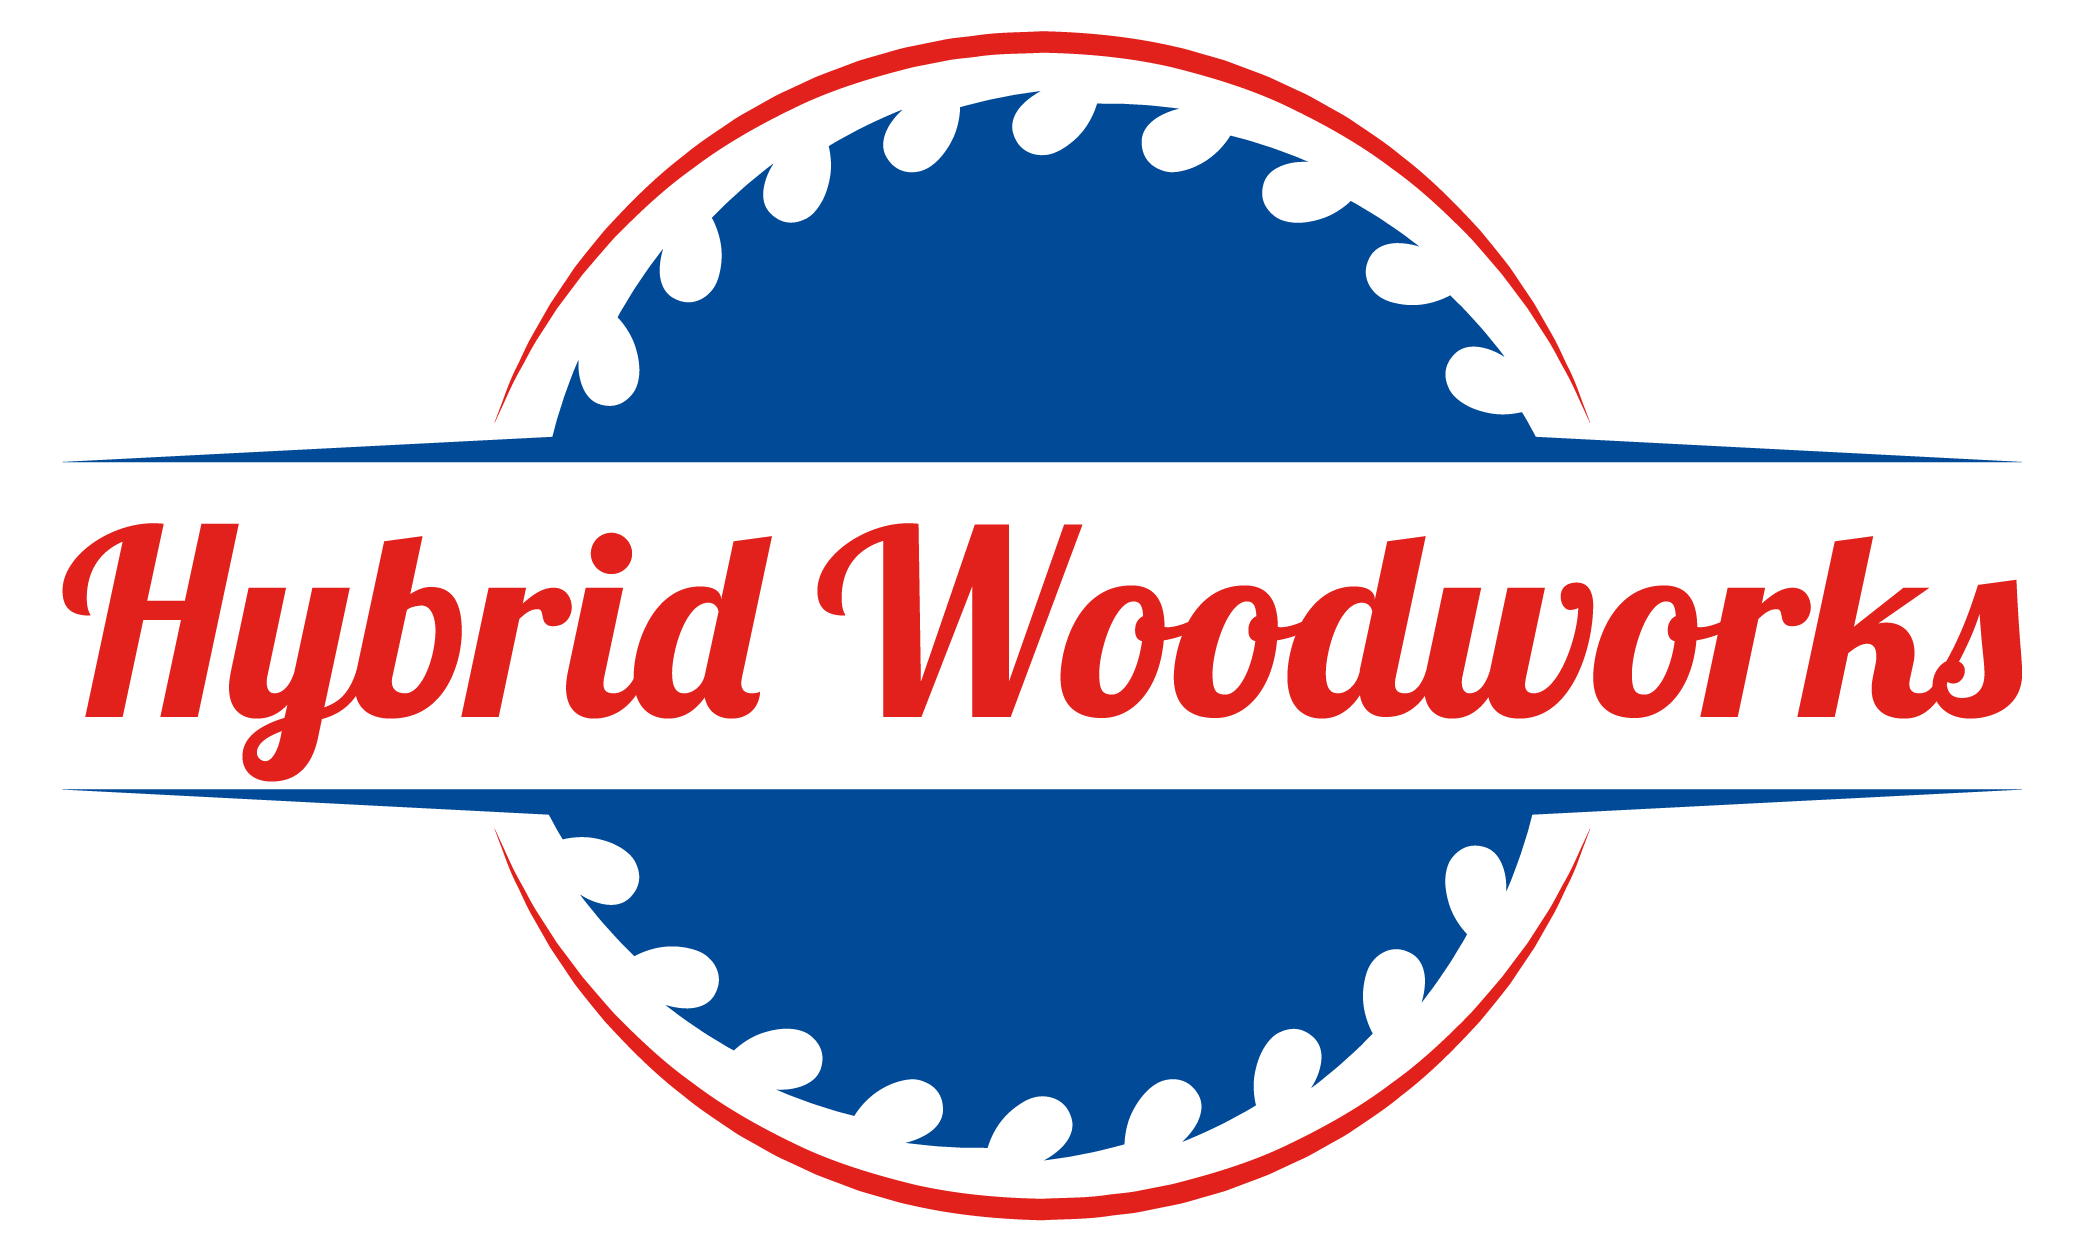 Hybrid Wood Works